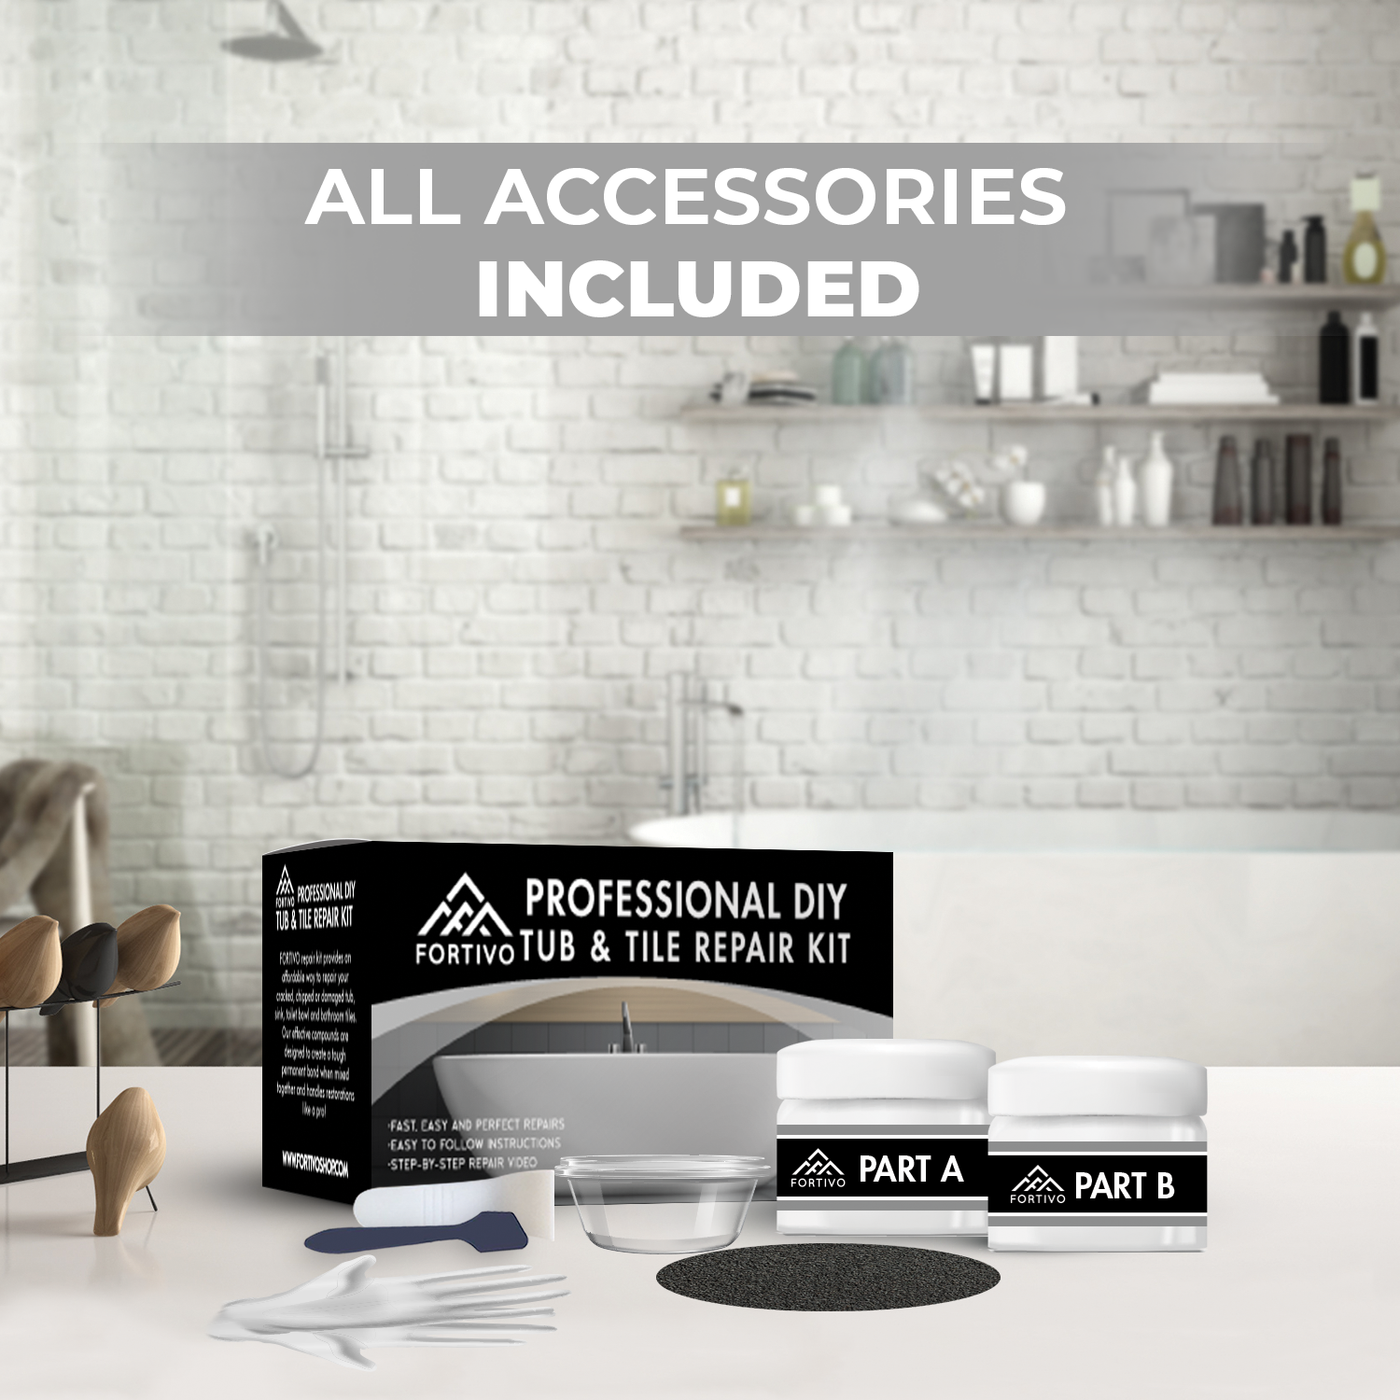 All-inclusive ceramic tile repair kit with essential accessories